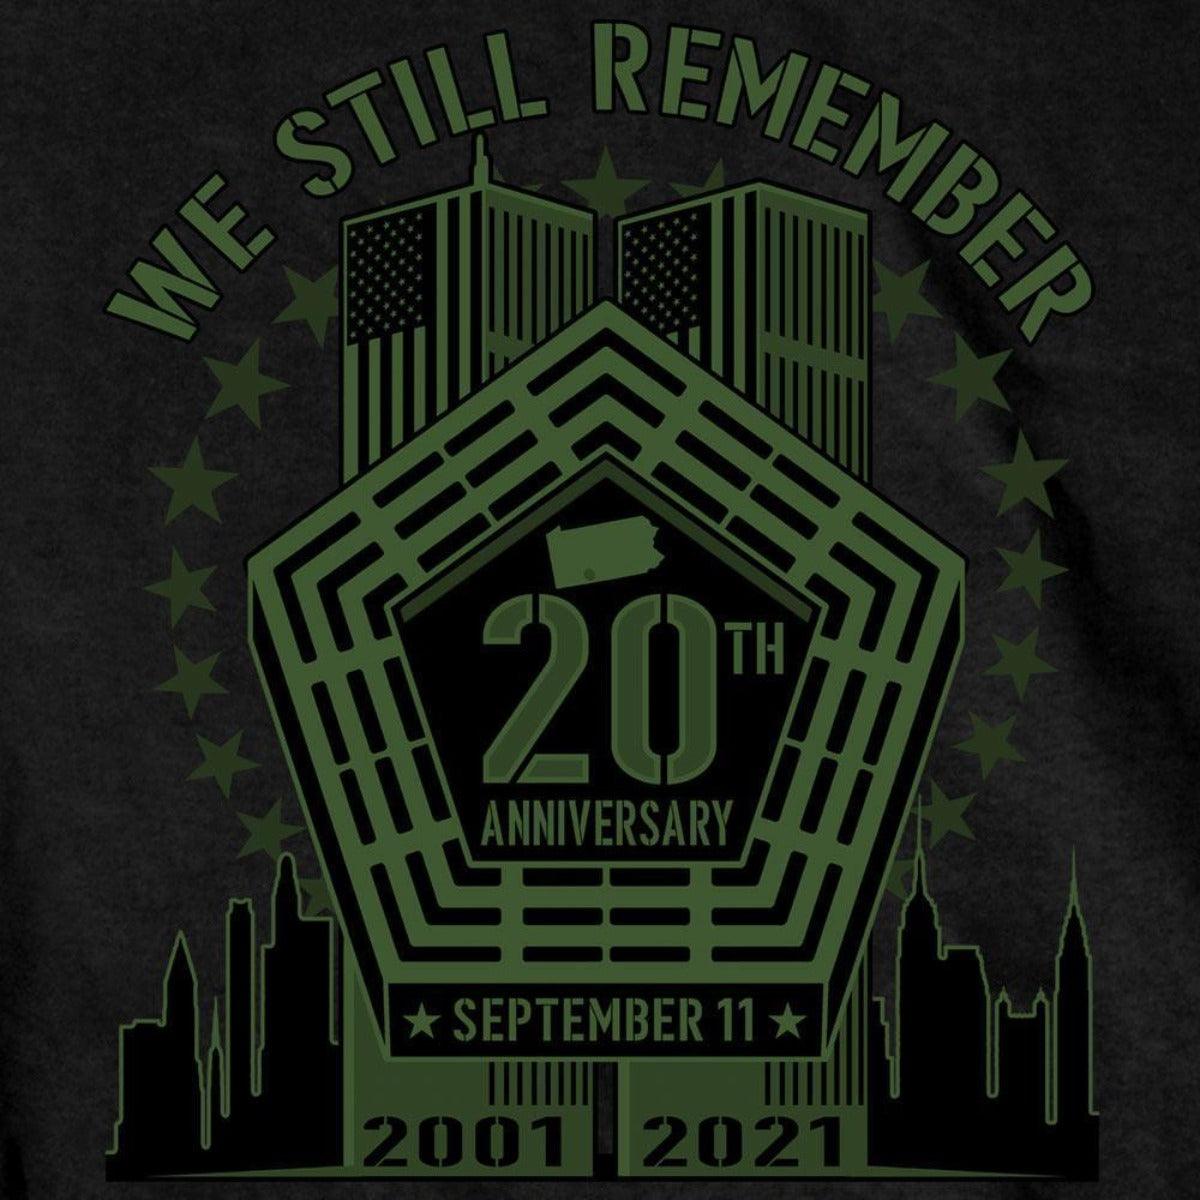 Hot Leathers Men's 9-11 We Still Remember T-Shirt - American Legend Rider